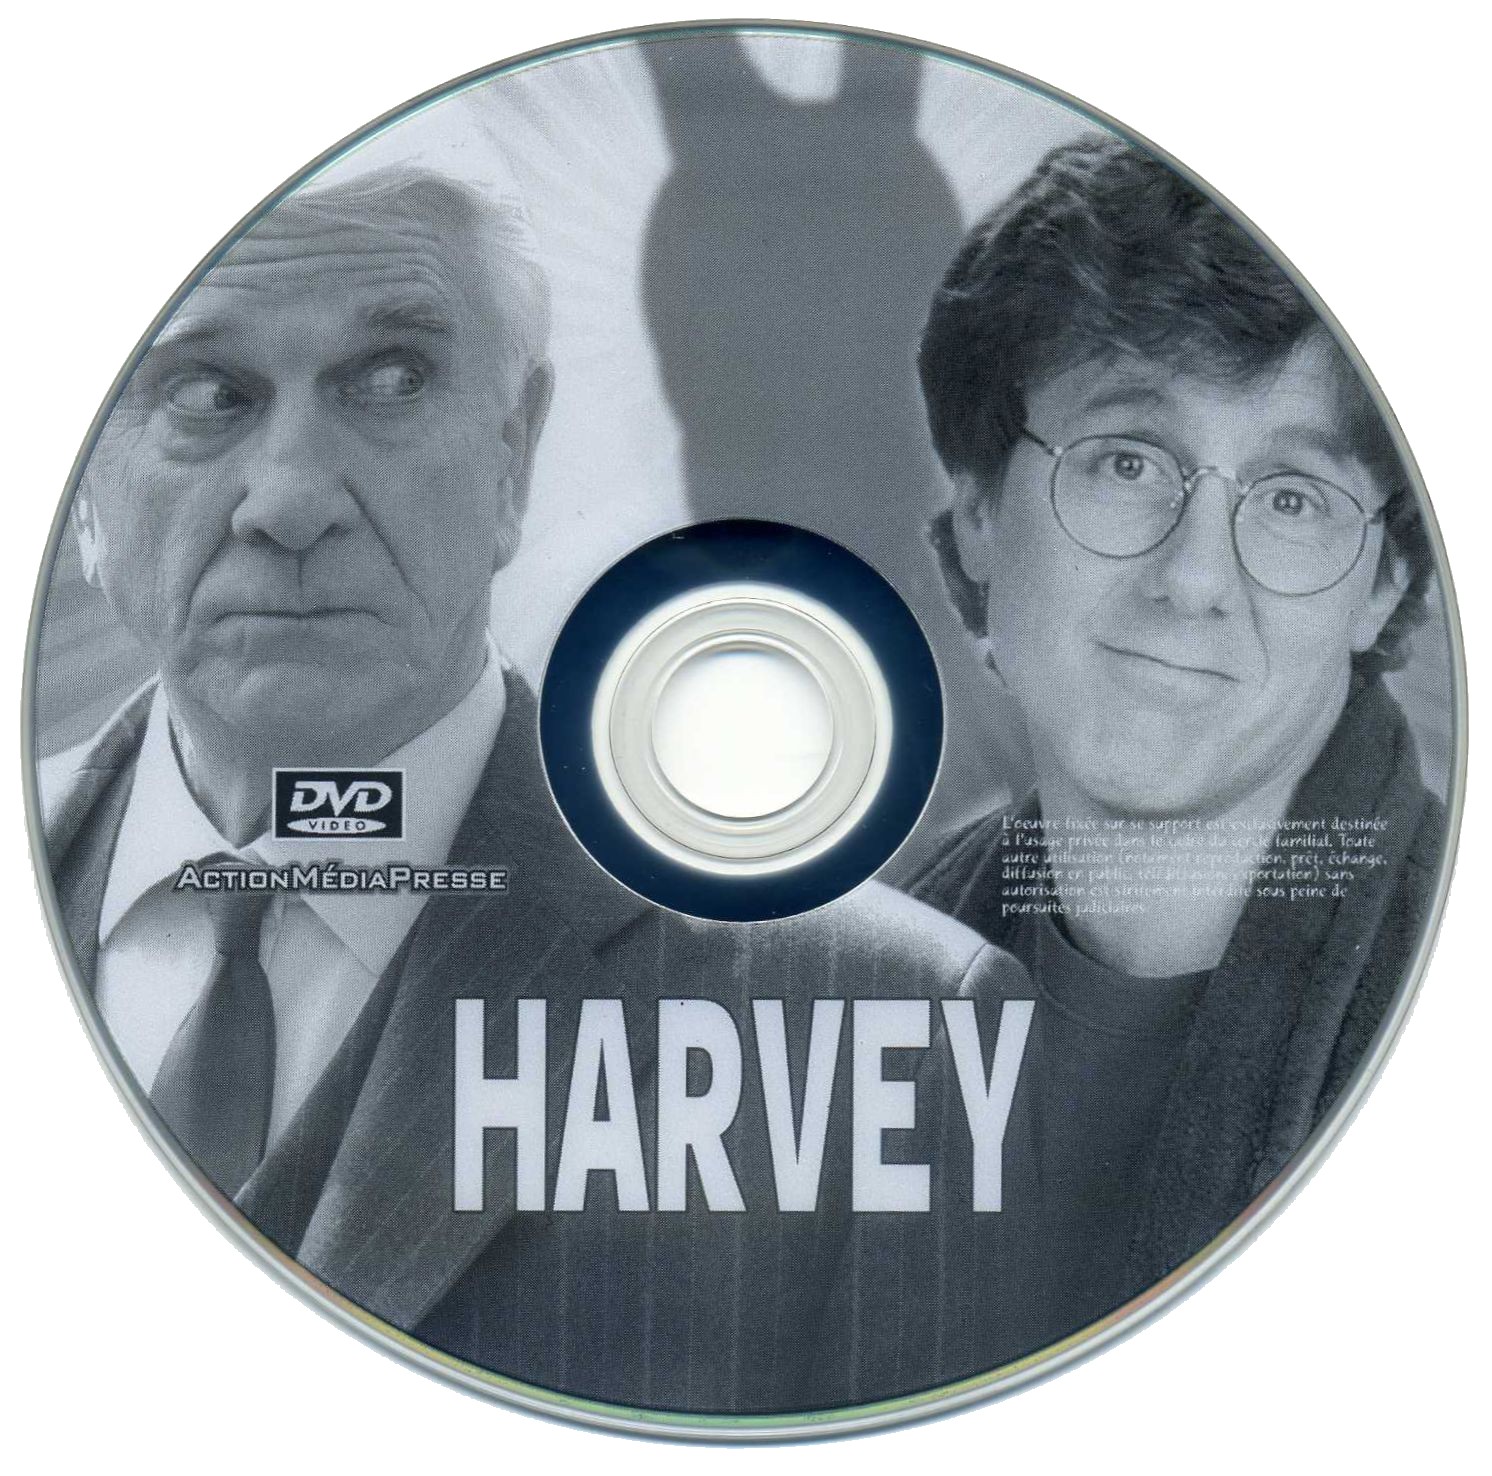 Harvey (1998)